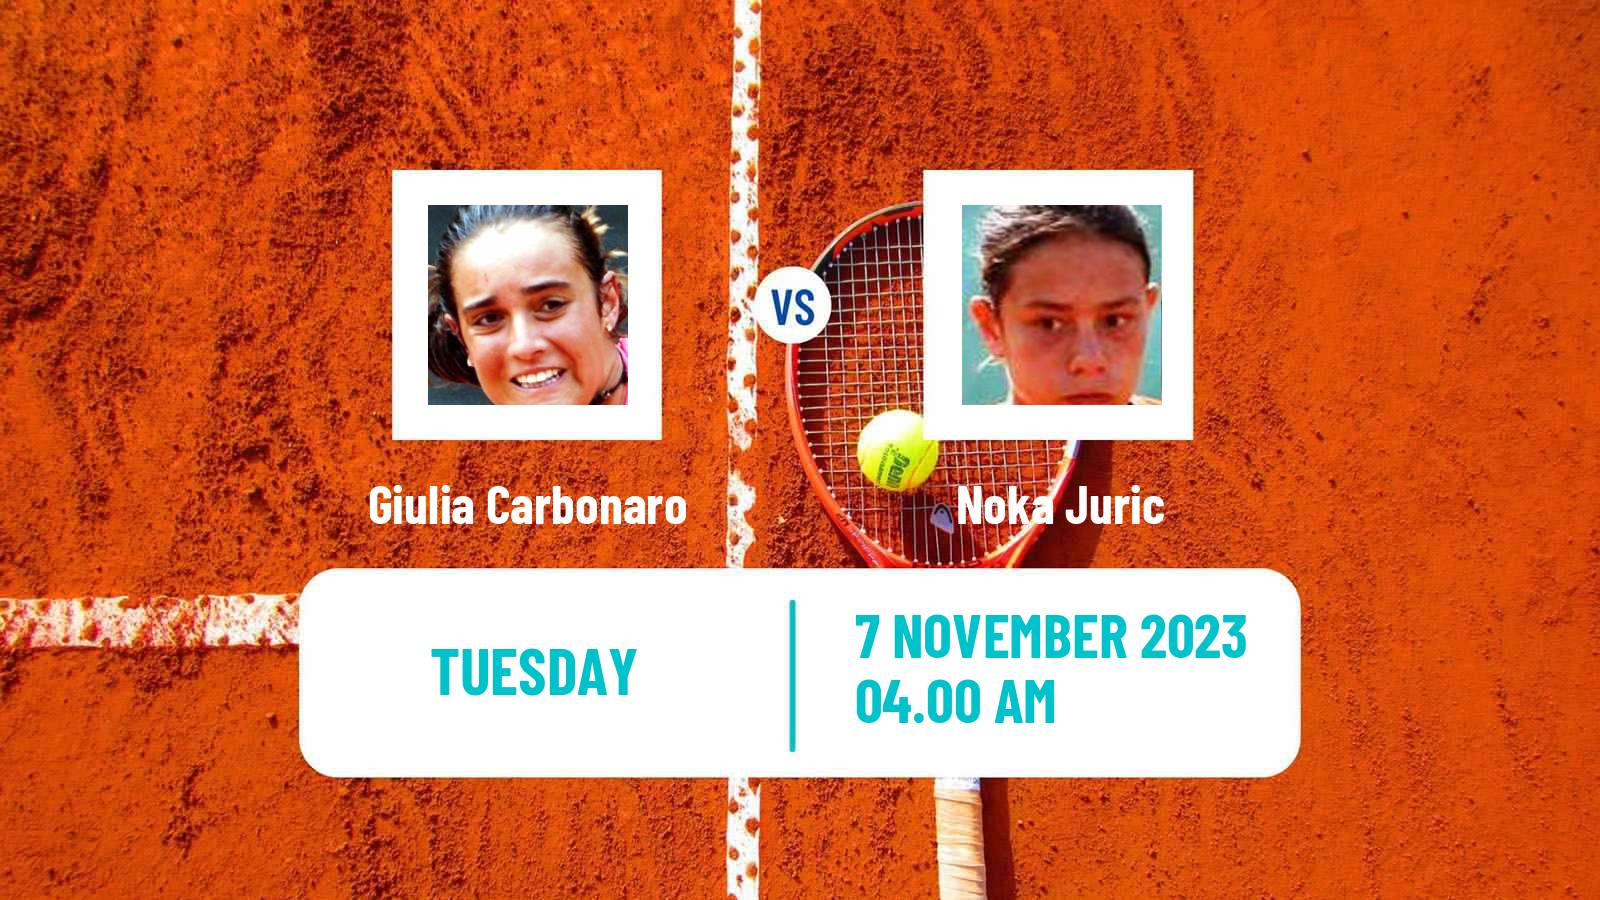 Tennis ITF W15 Antalya 17 Women 2023 Giulia Carbonaro - Noka Juric